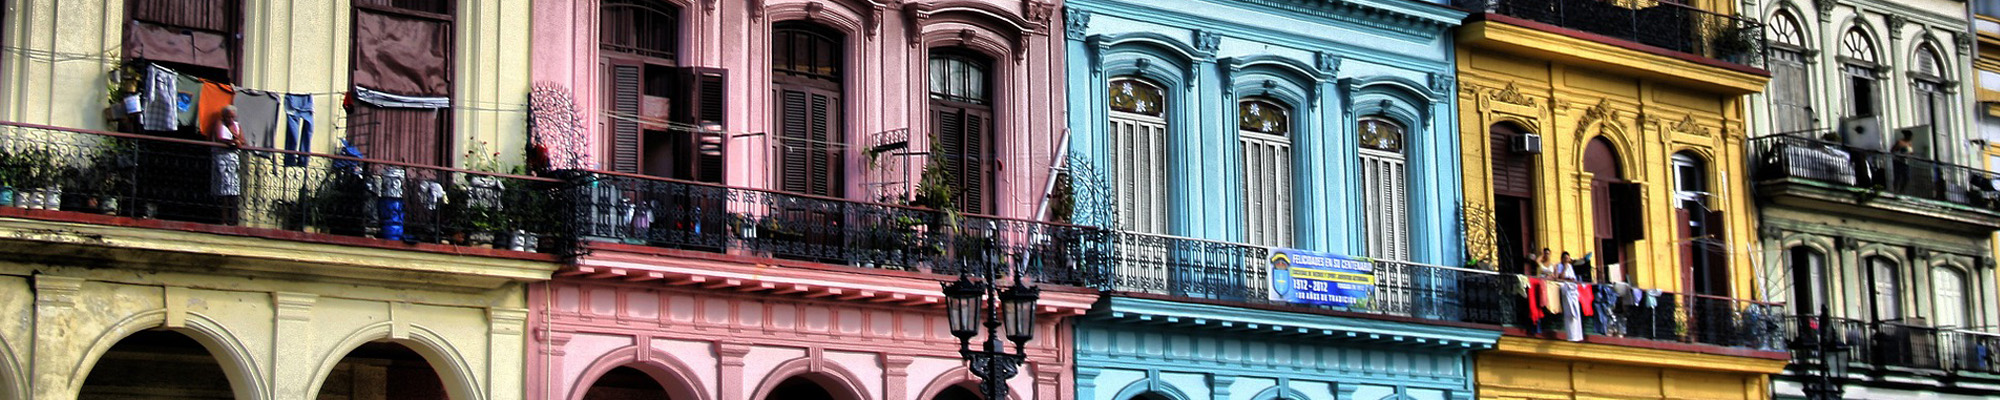 balconies of colorful buildings in cuba